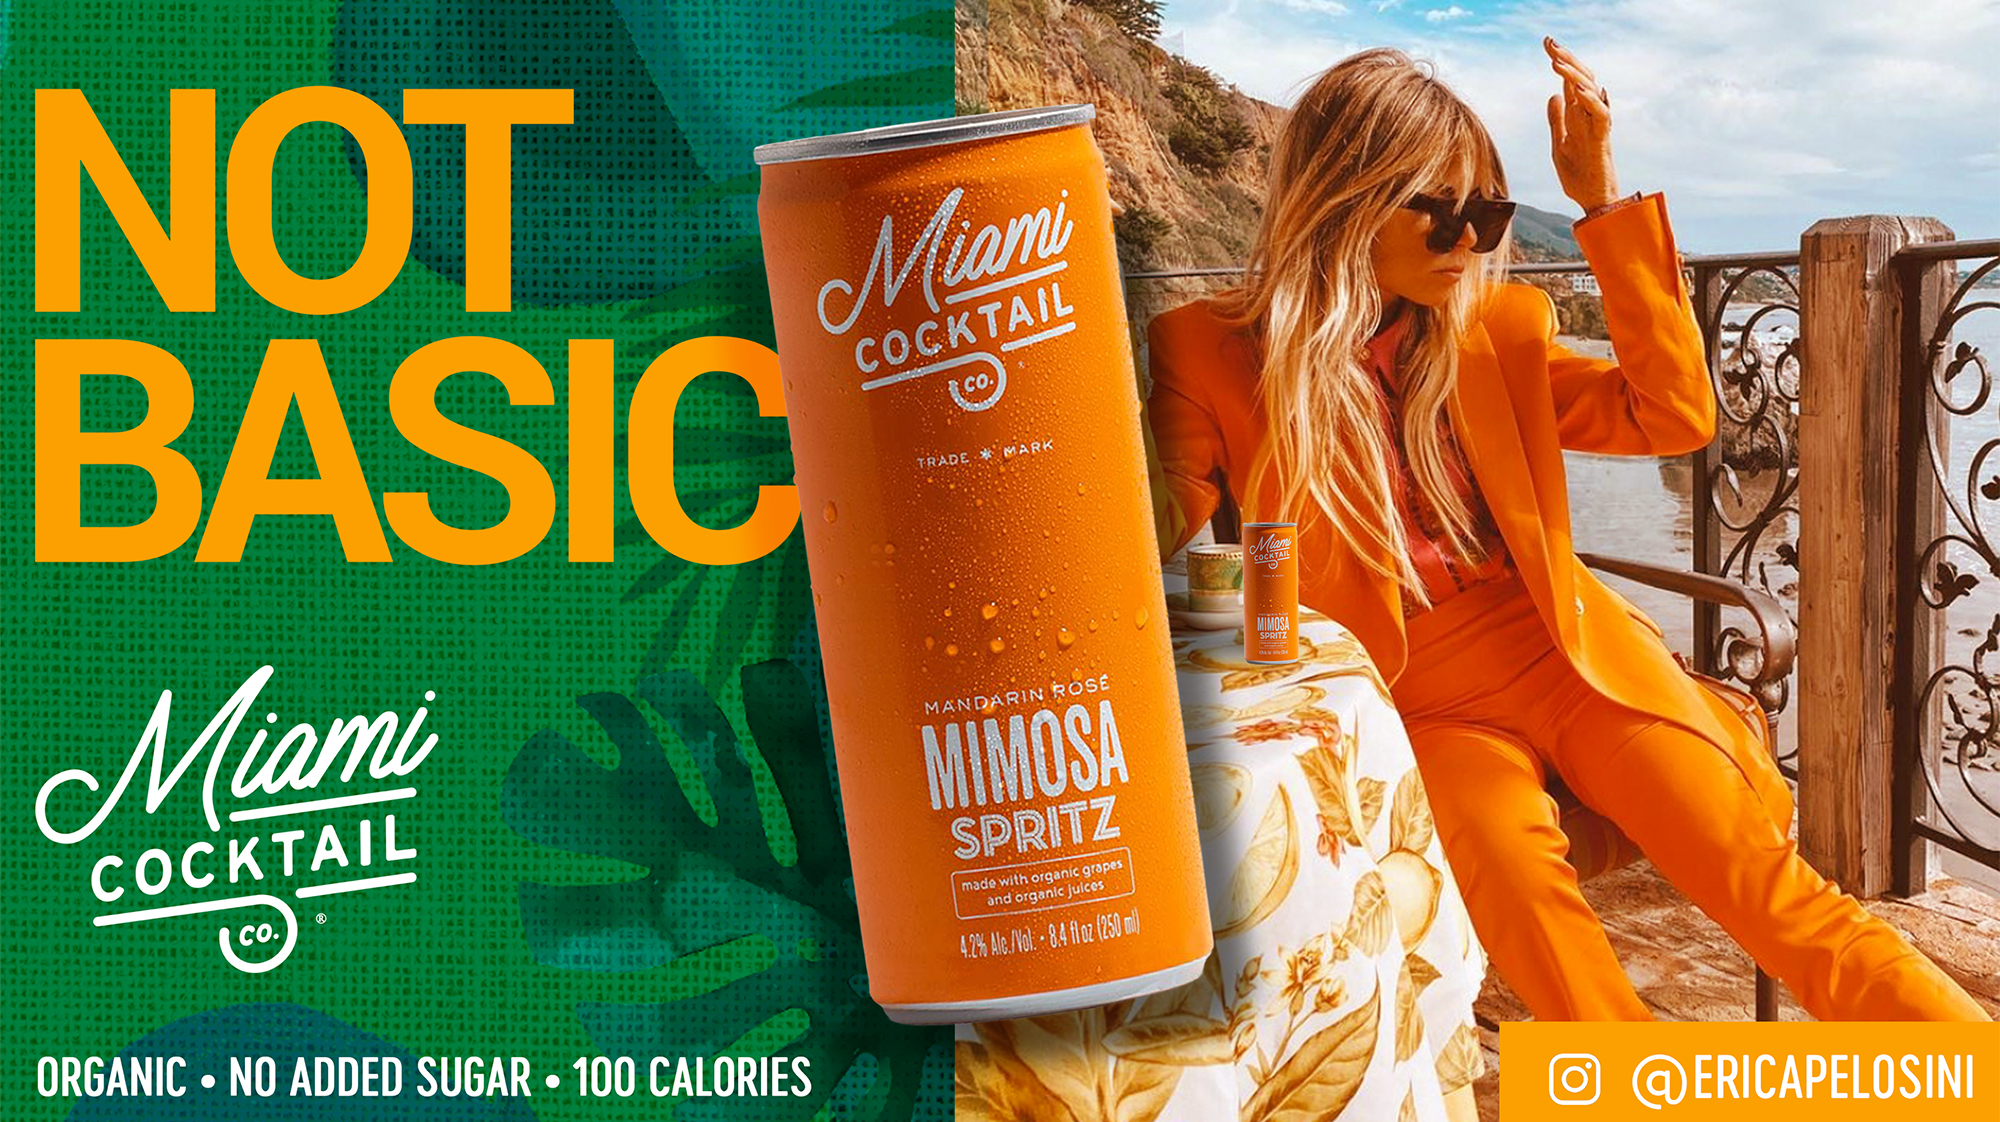 miami cocktails #notbasic campaign